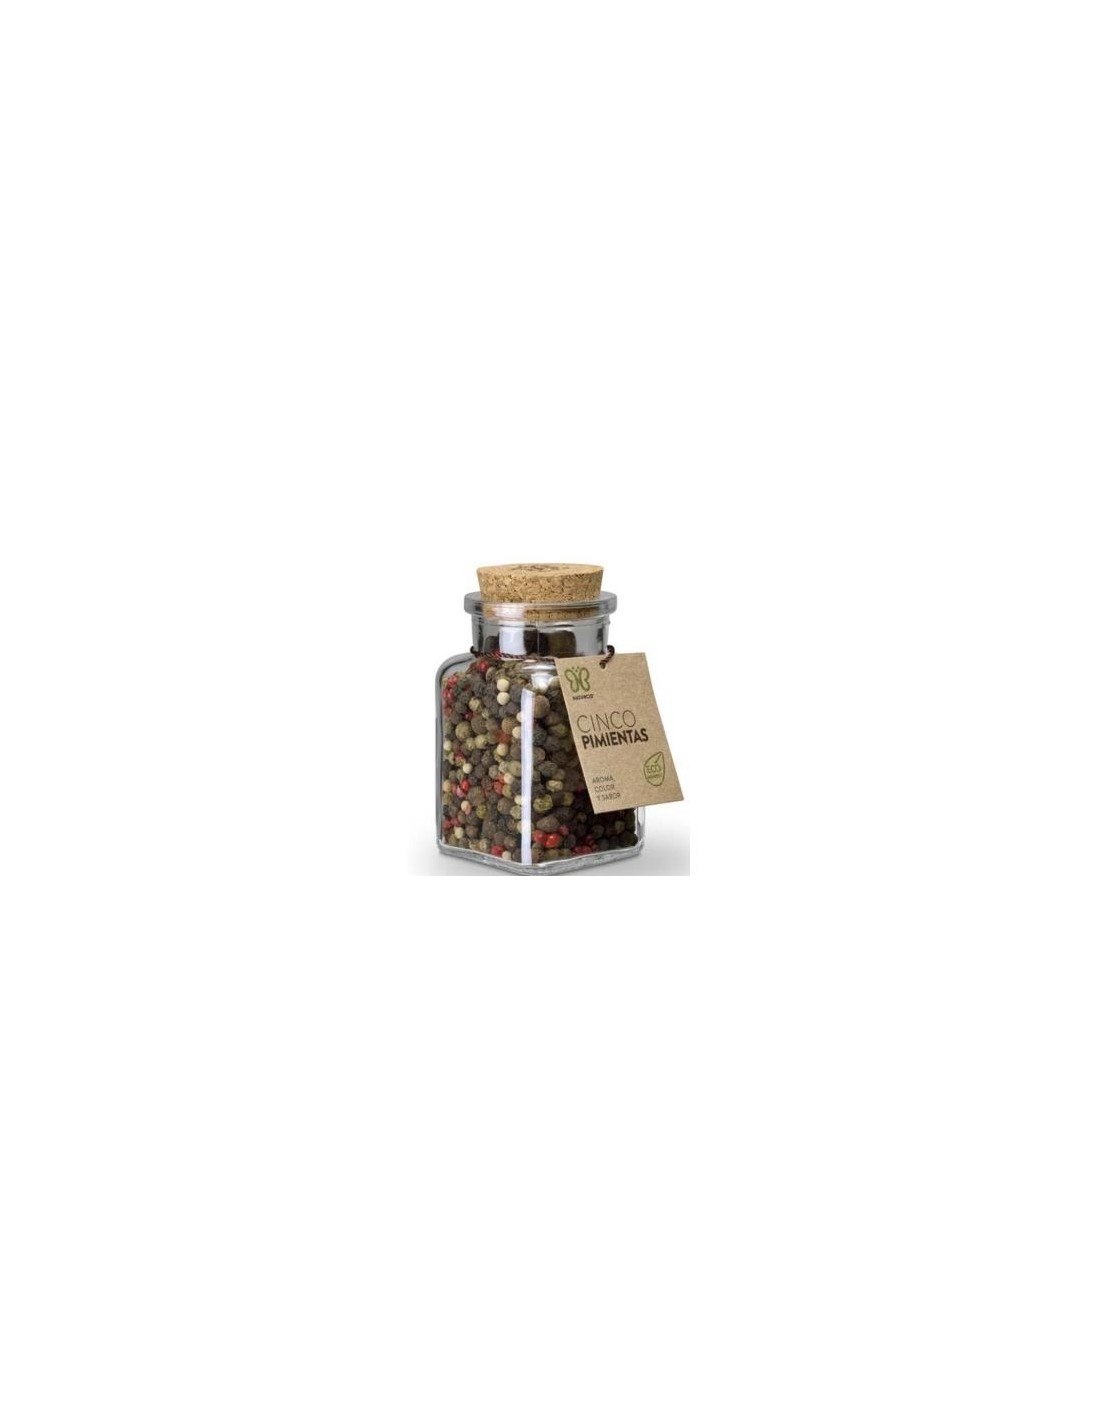 Cúrcuma en Polvo 90gr – Aroma Spice